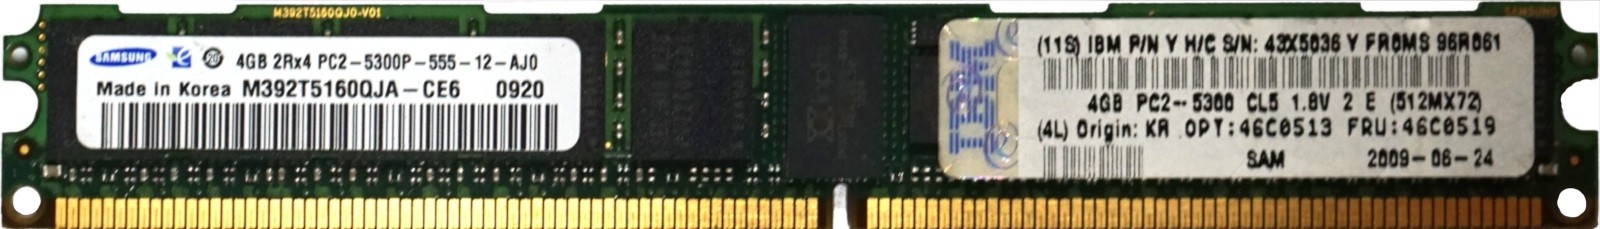 IBM (43X5036) - 4GB PC2-5300P-VLP (DDR2-667Mhz, 2RX4)